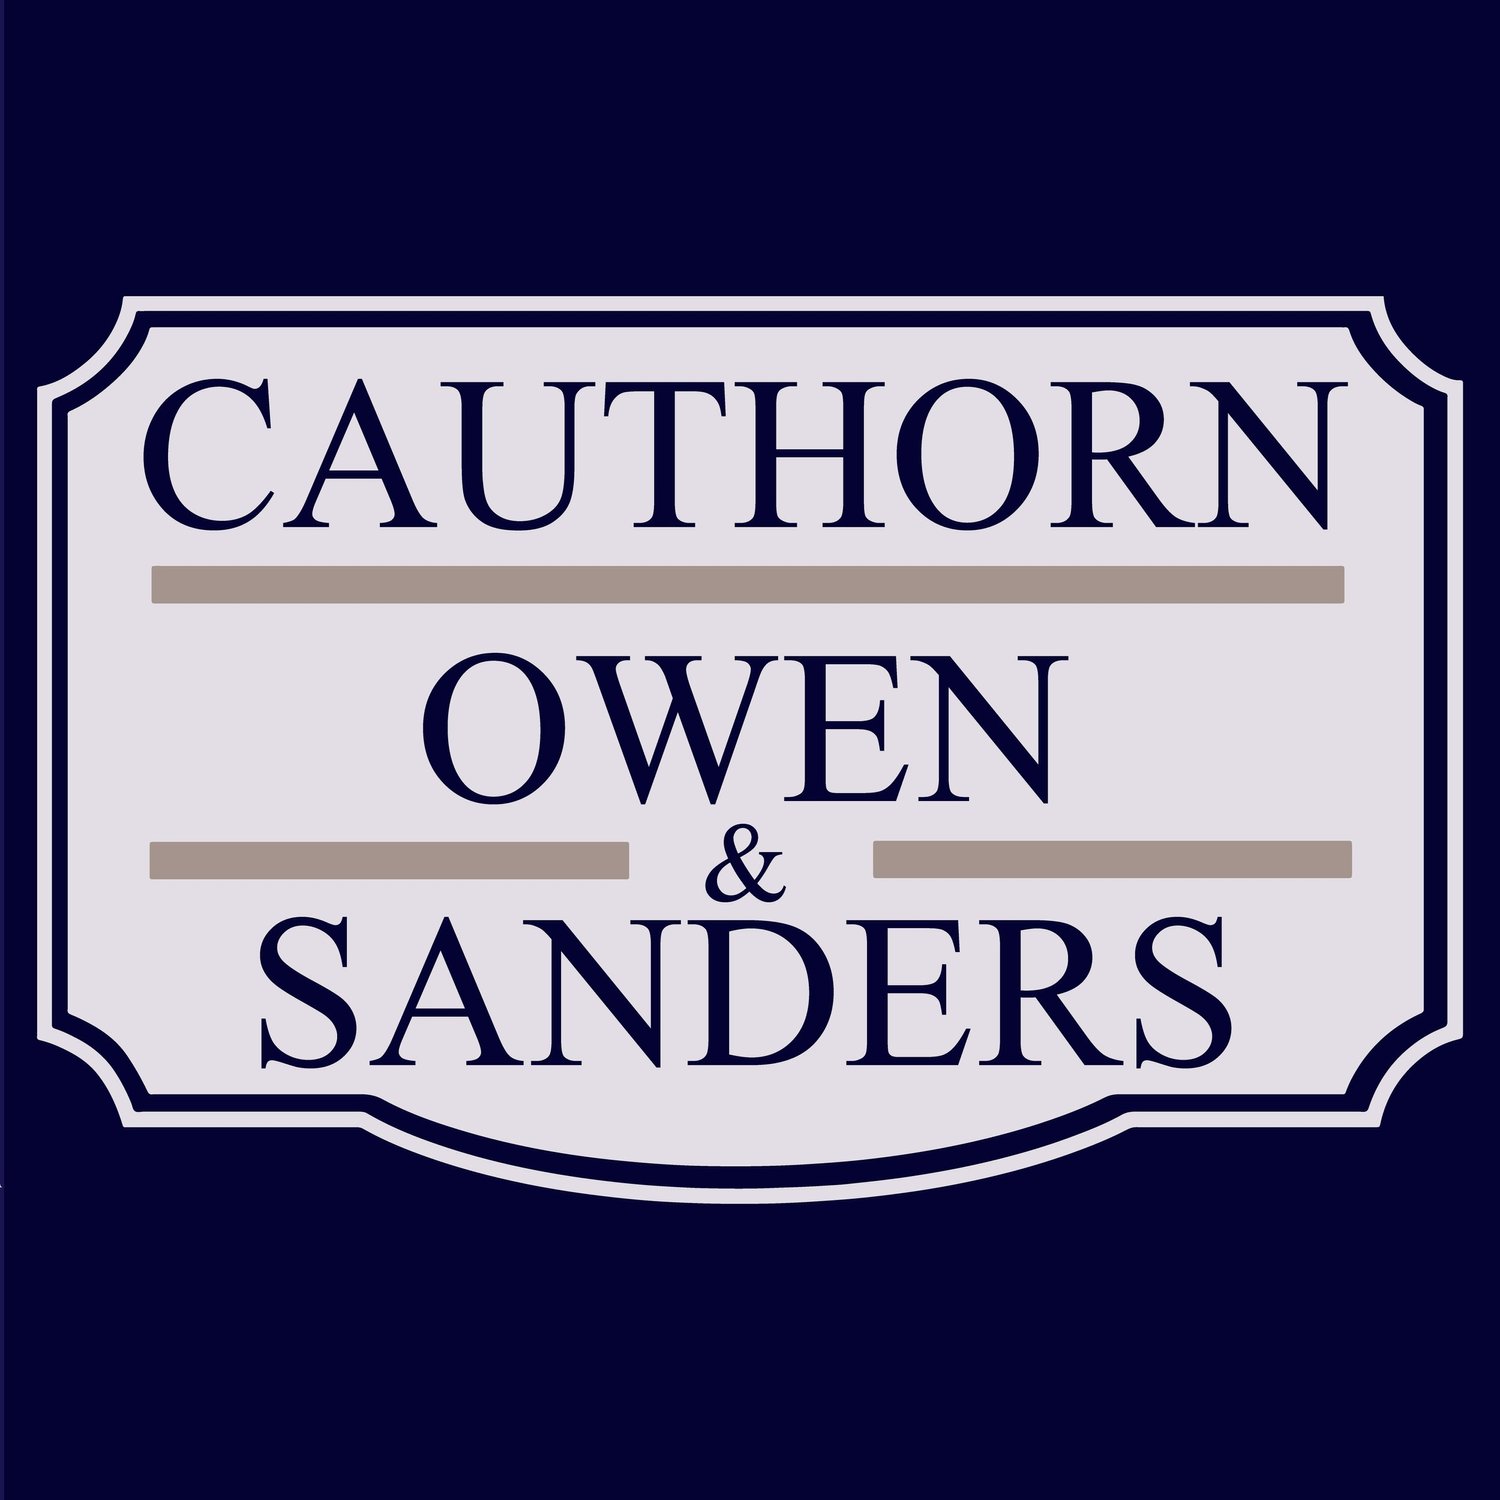 Cauthorn Owen & Sanders